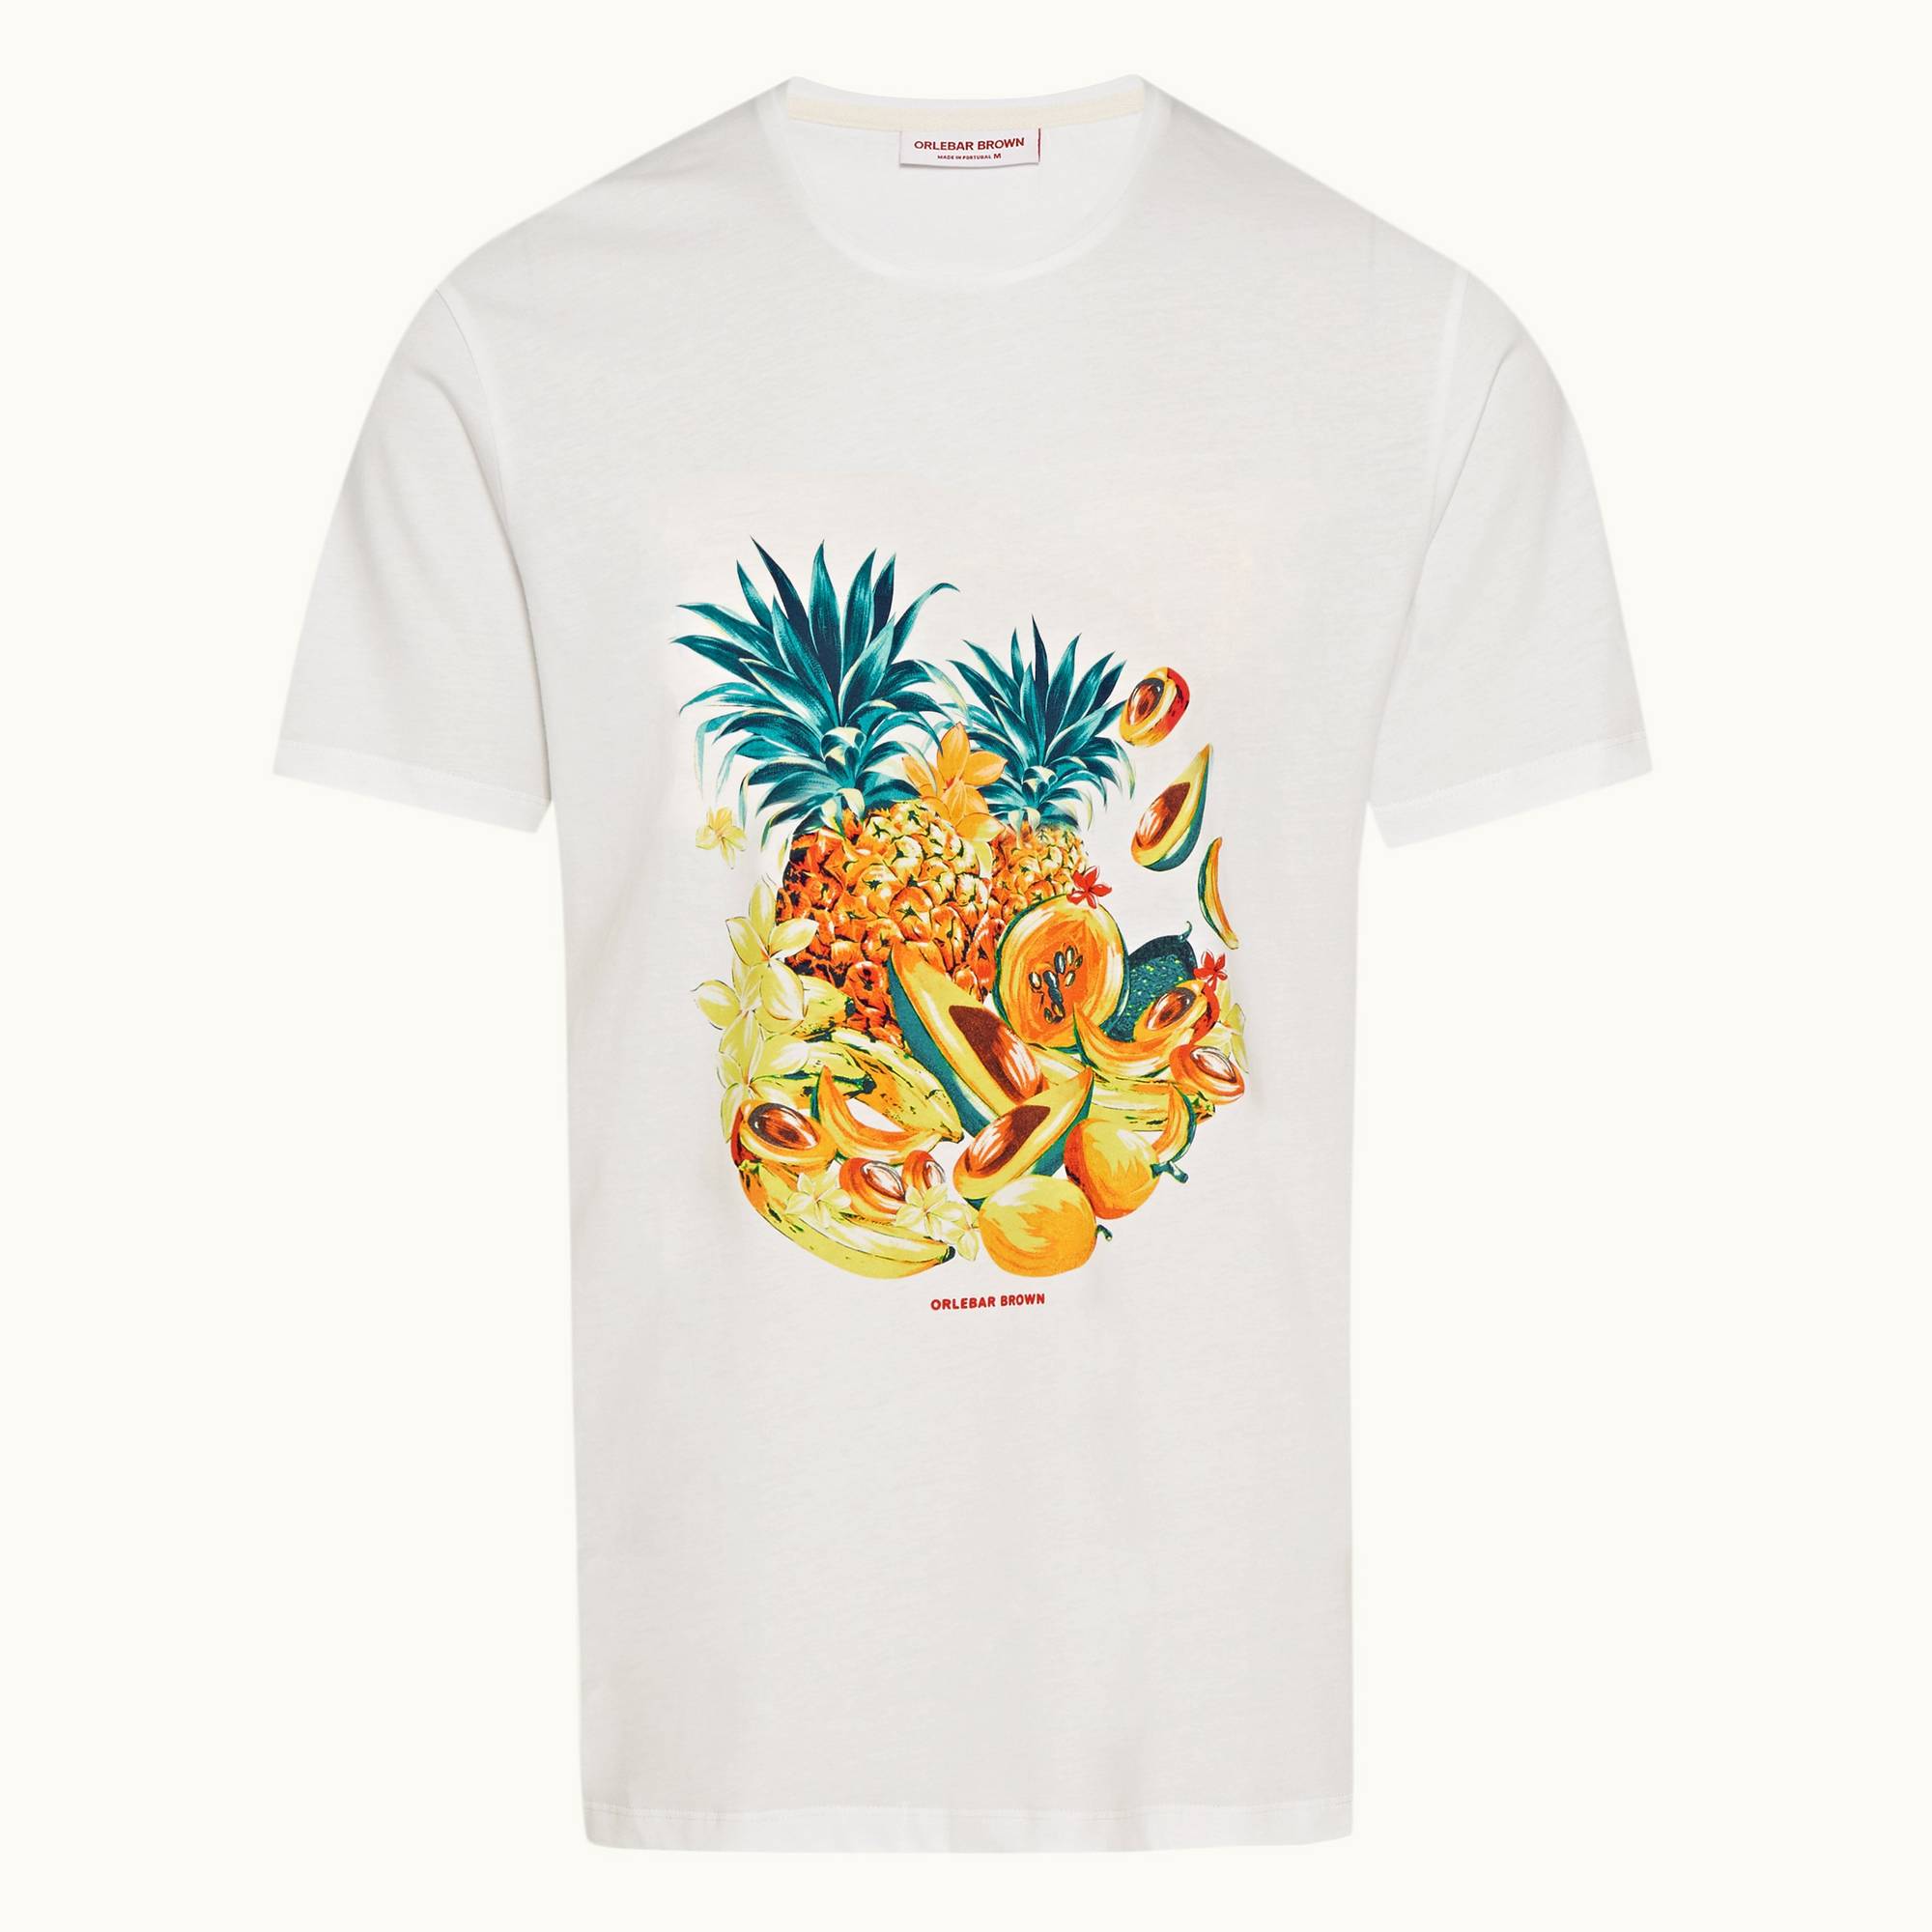 Nicolas - Mens Cloud 'Club Tropicana' Print Relaxed Fit T-shirt